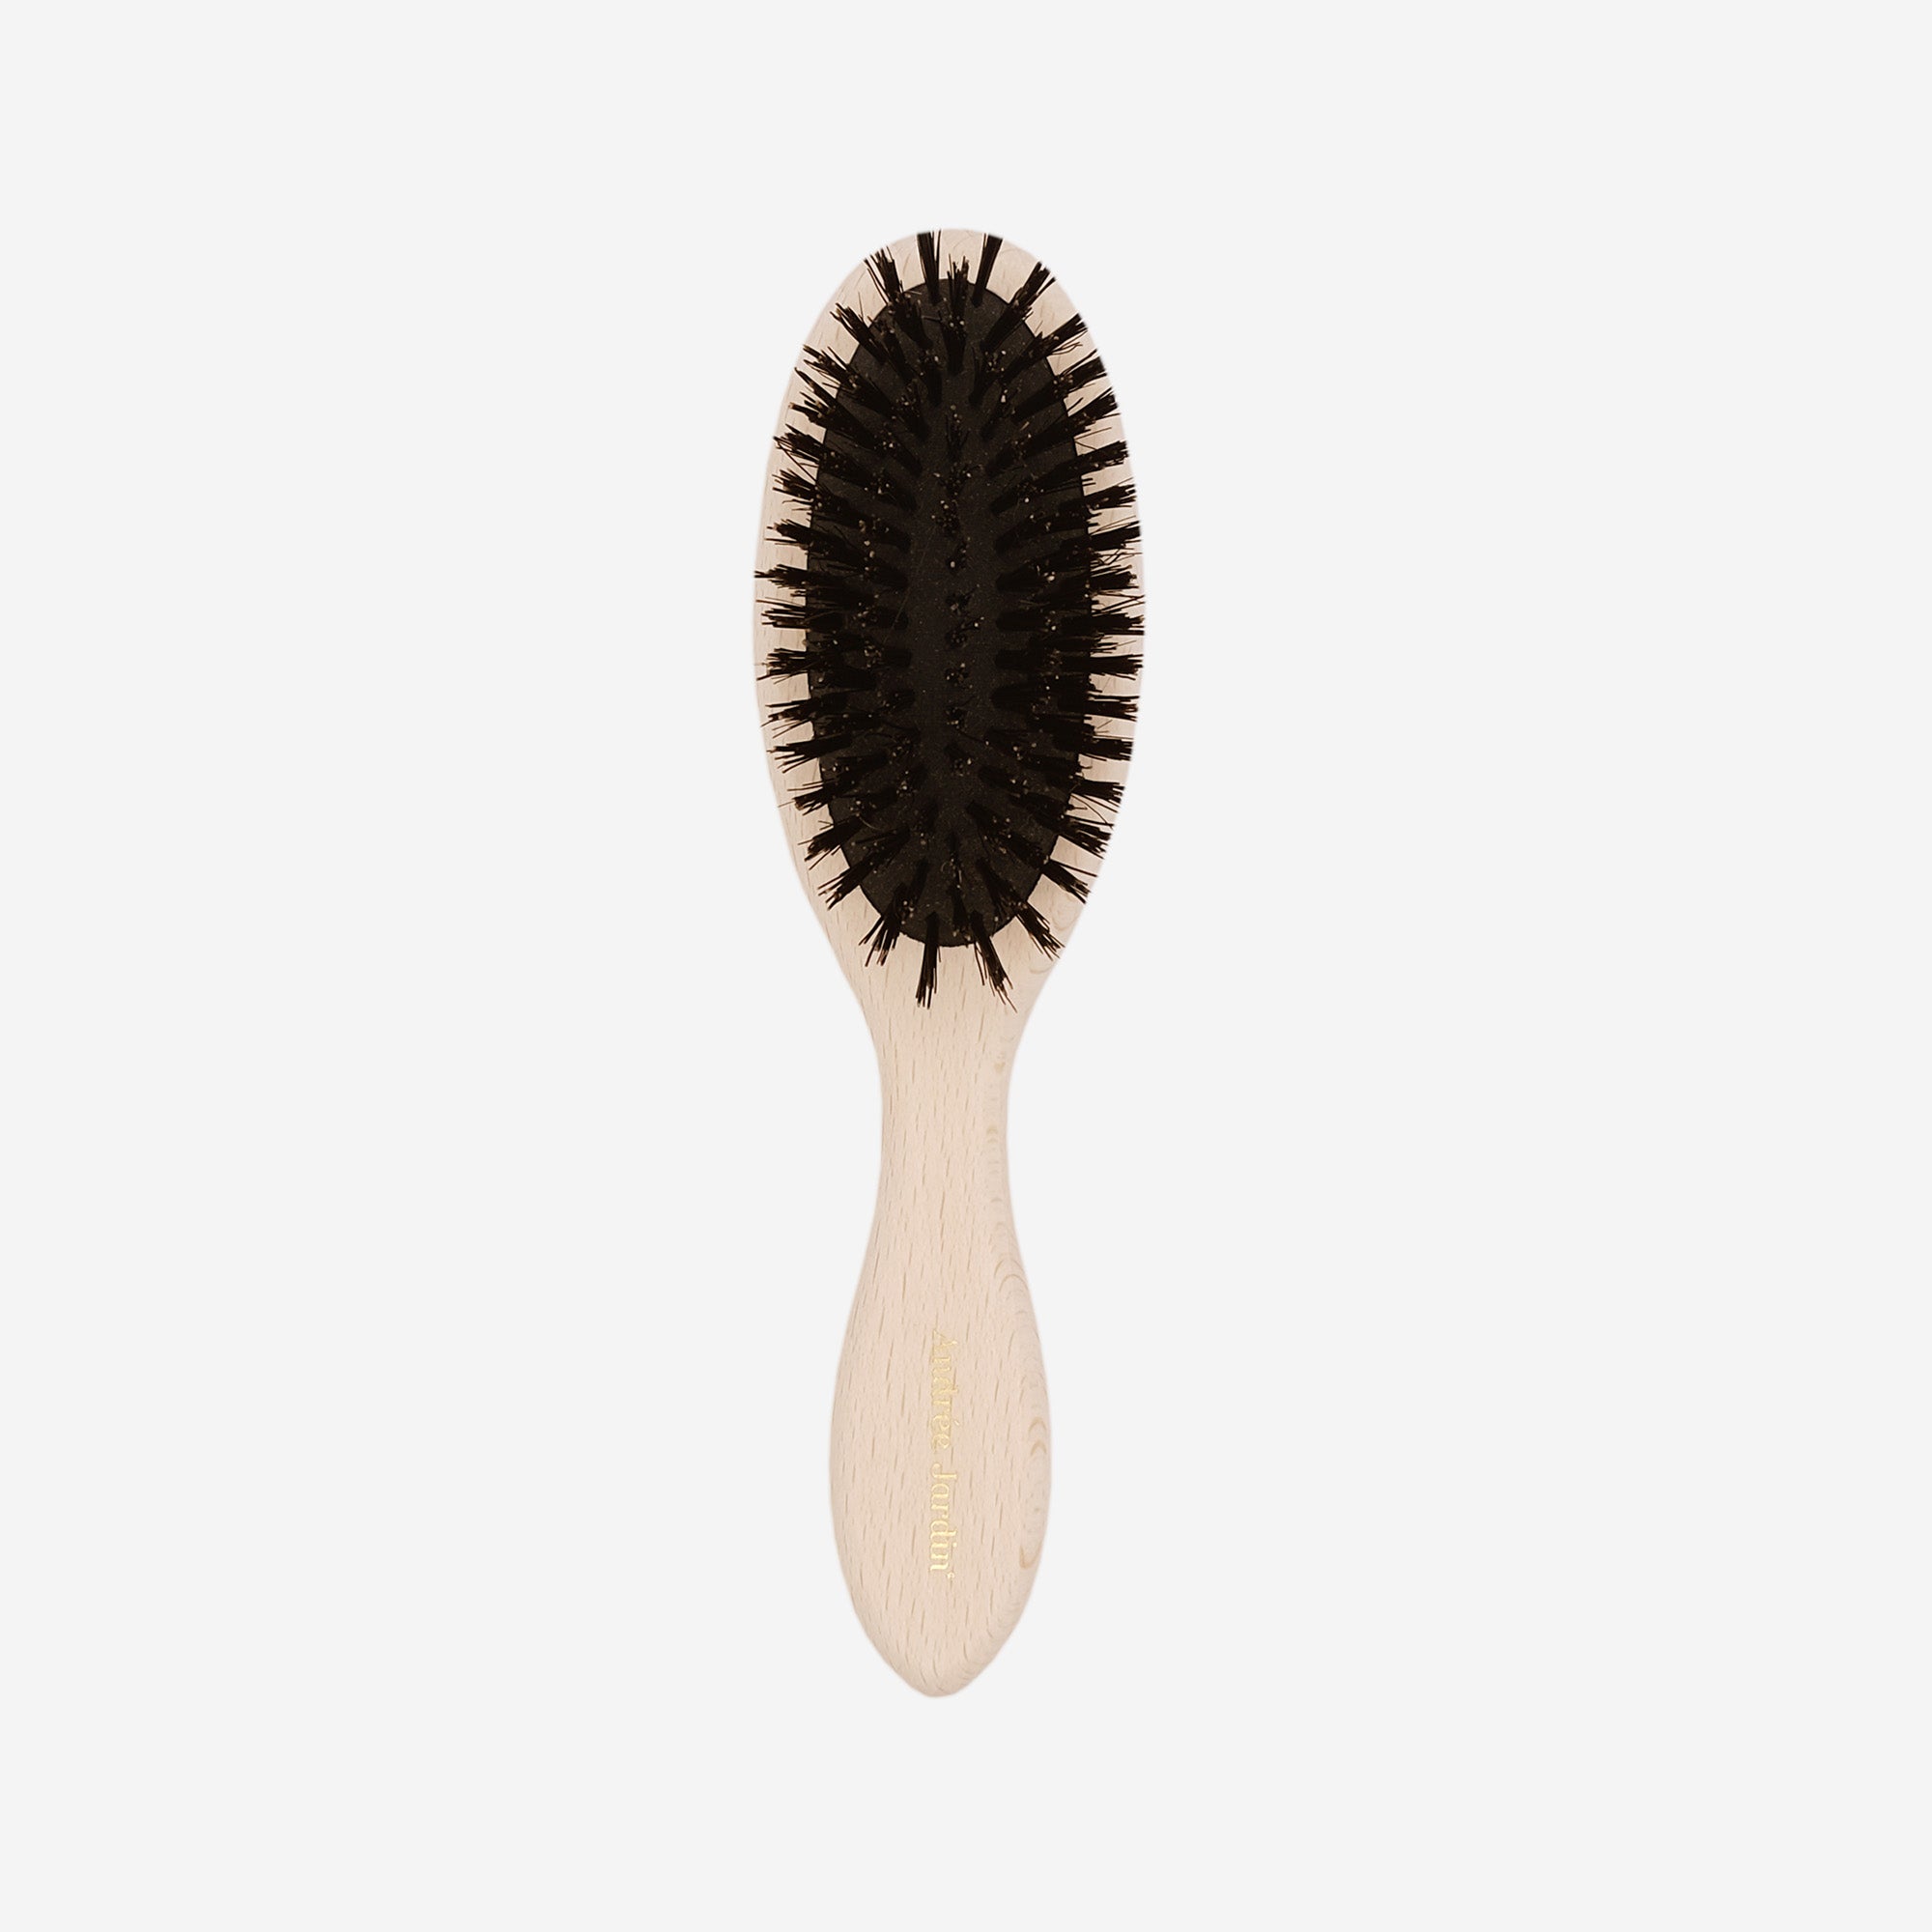 Boar bristle hair brush